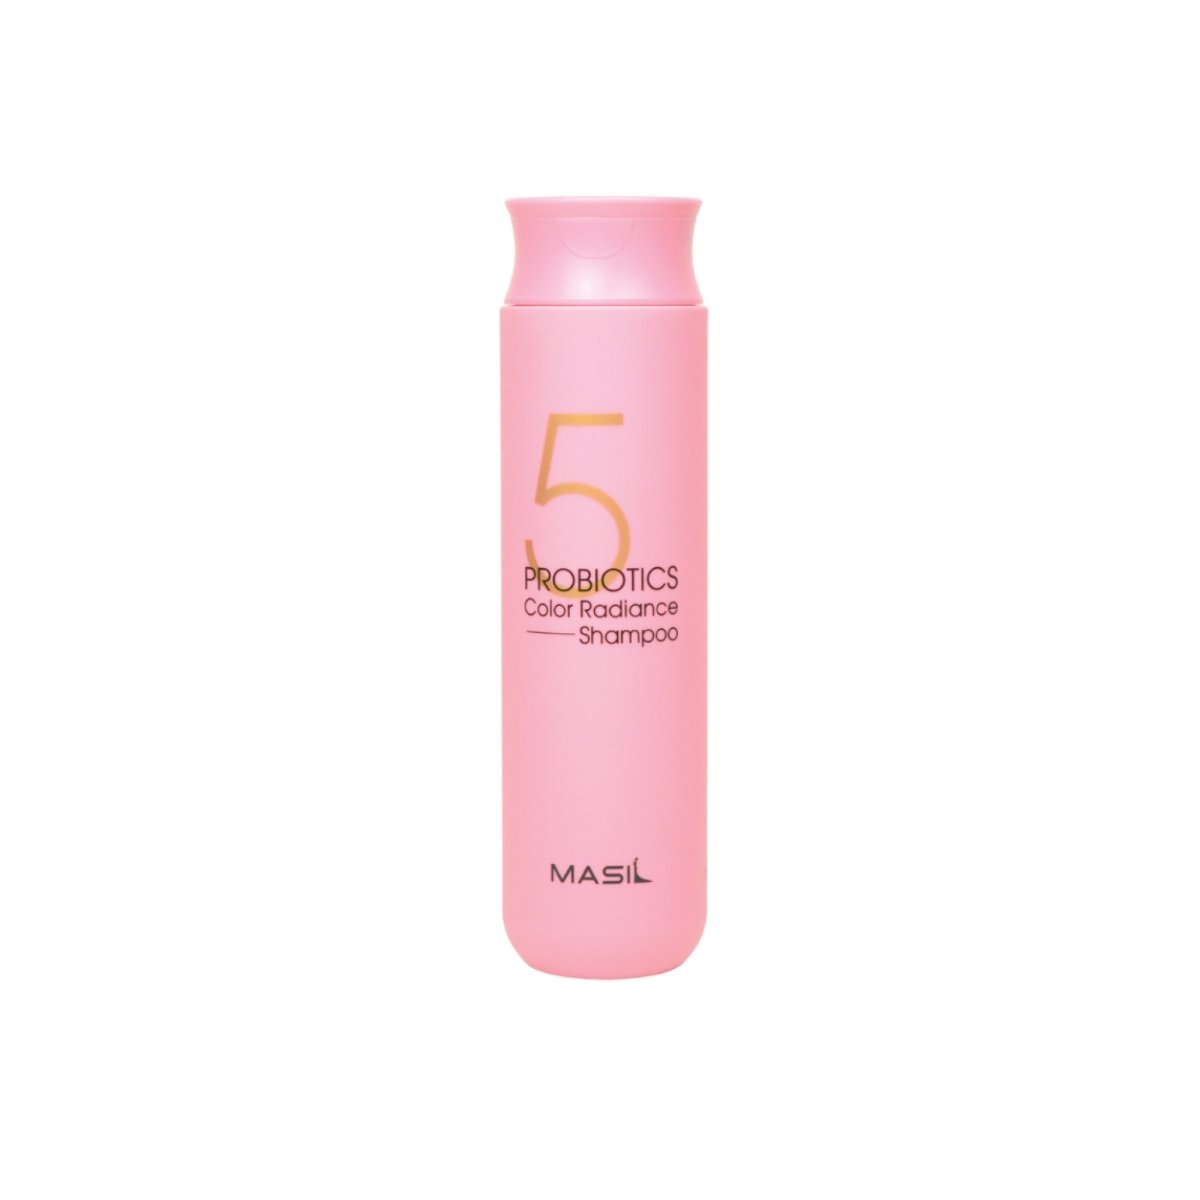 MASIL - Probiotics Color Radiance Shampoo - Stellar K-Beauty